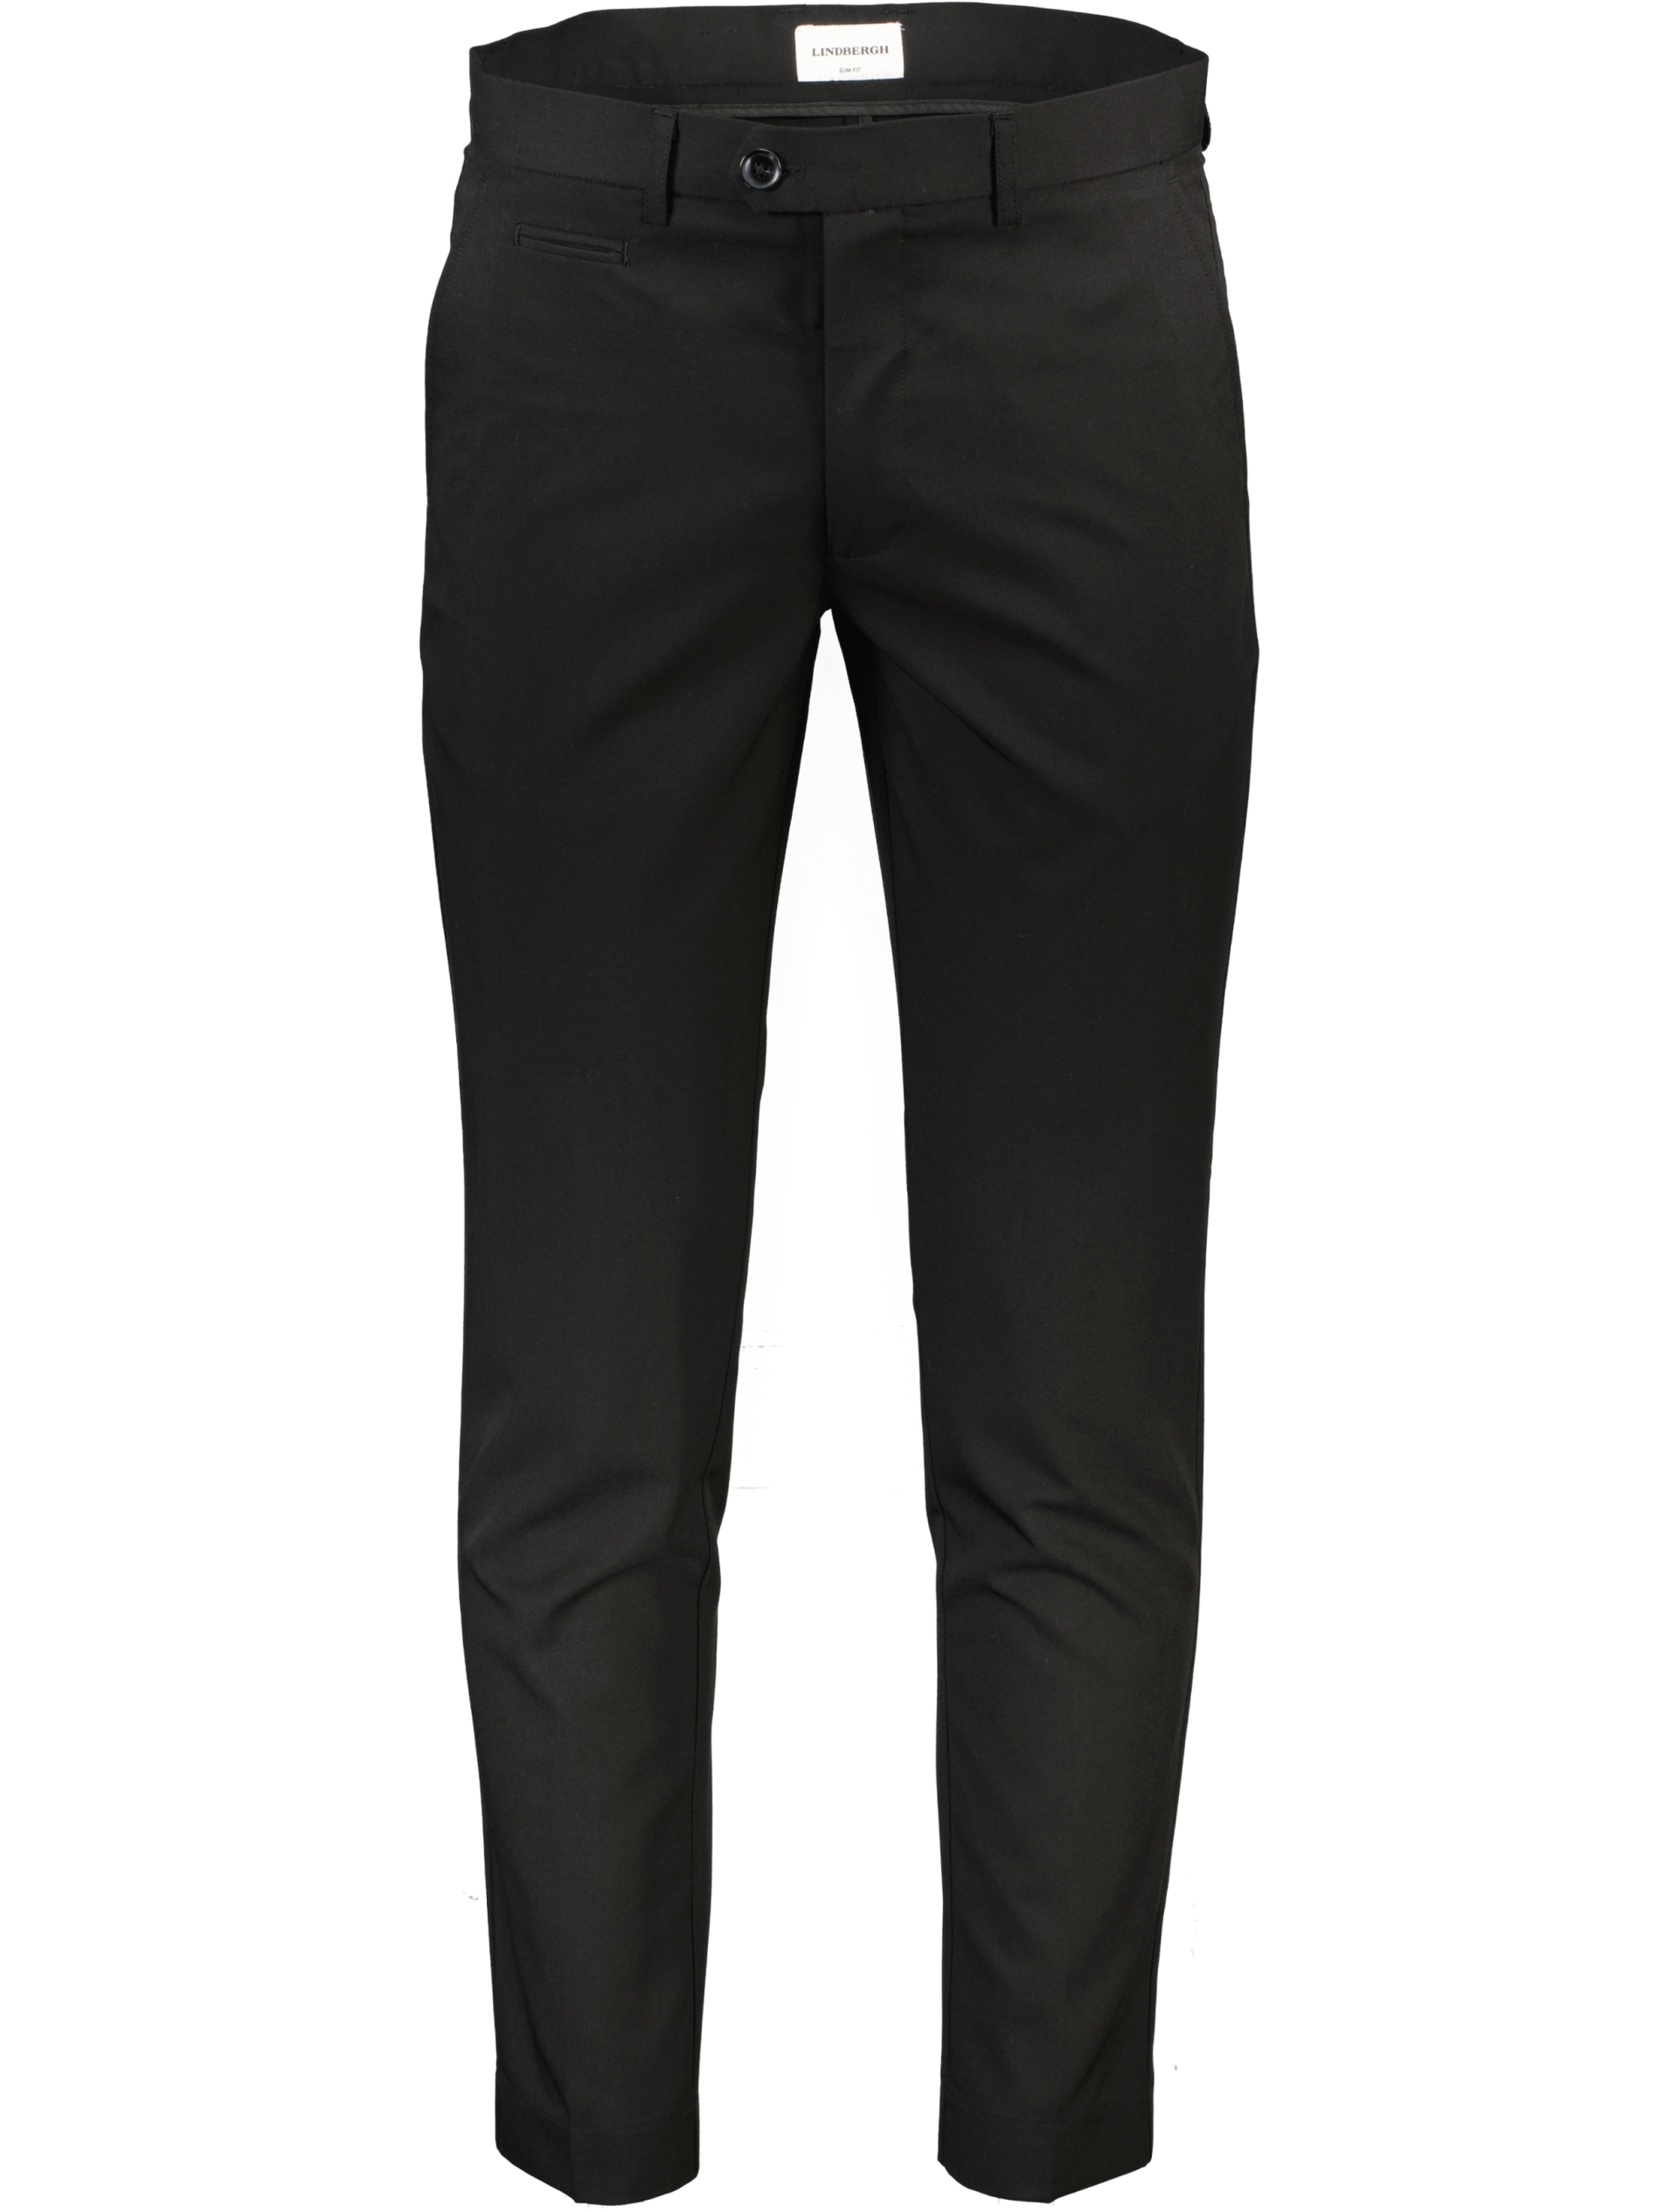 Lindbergh Club pants black / black